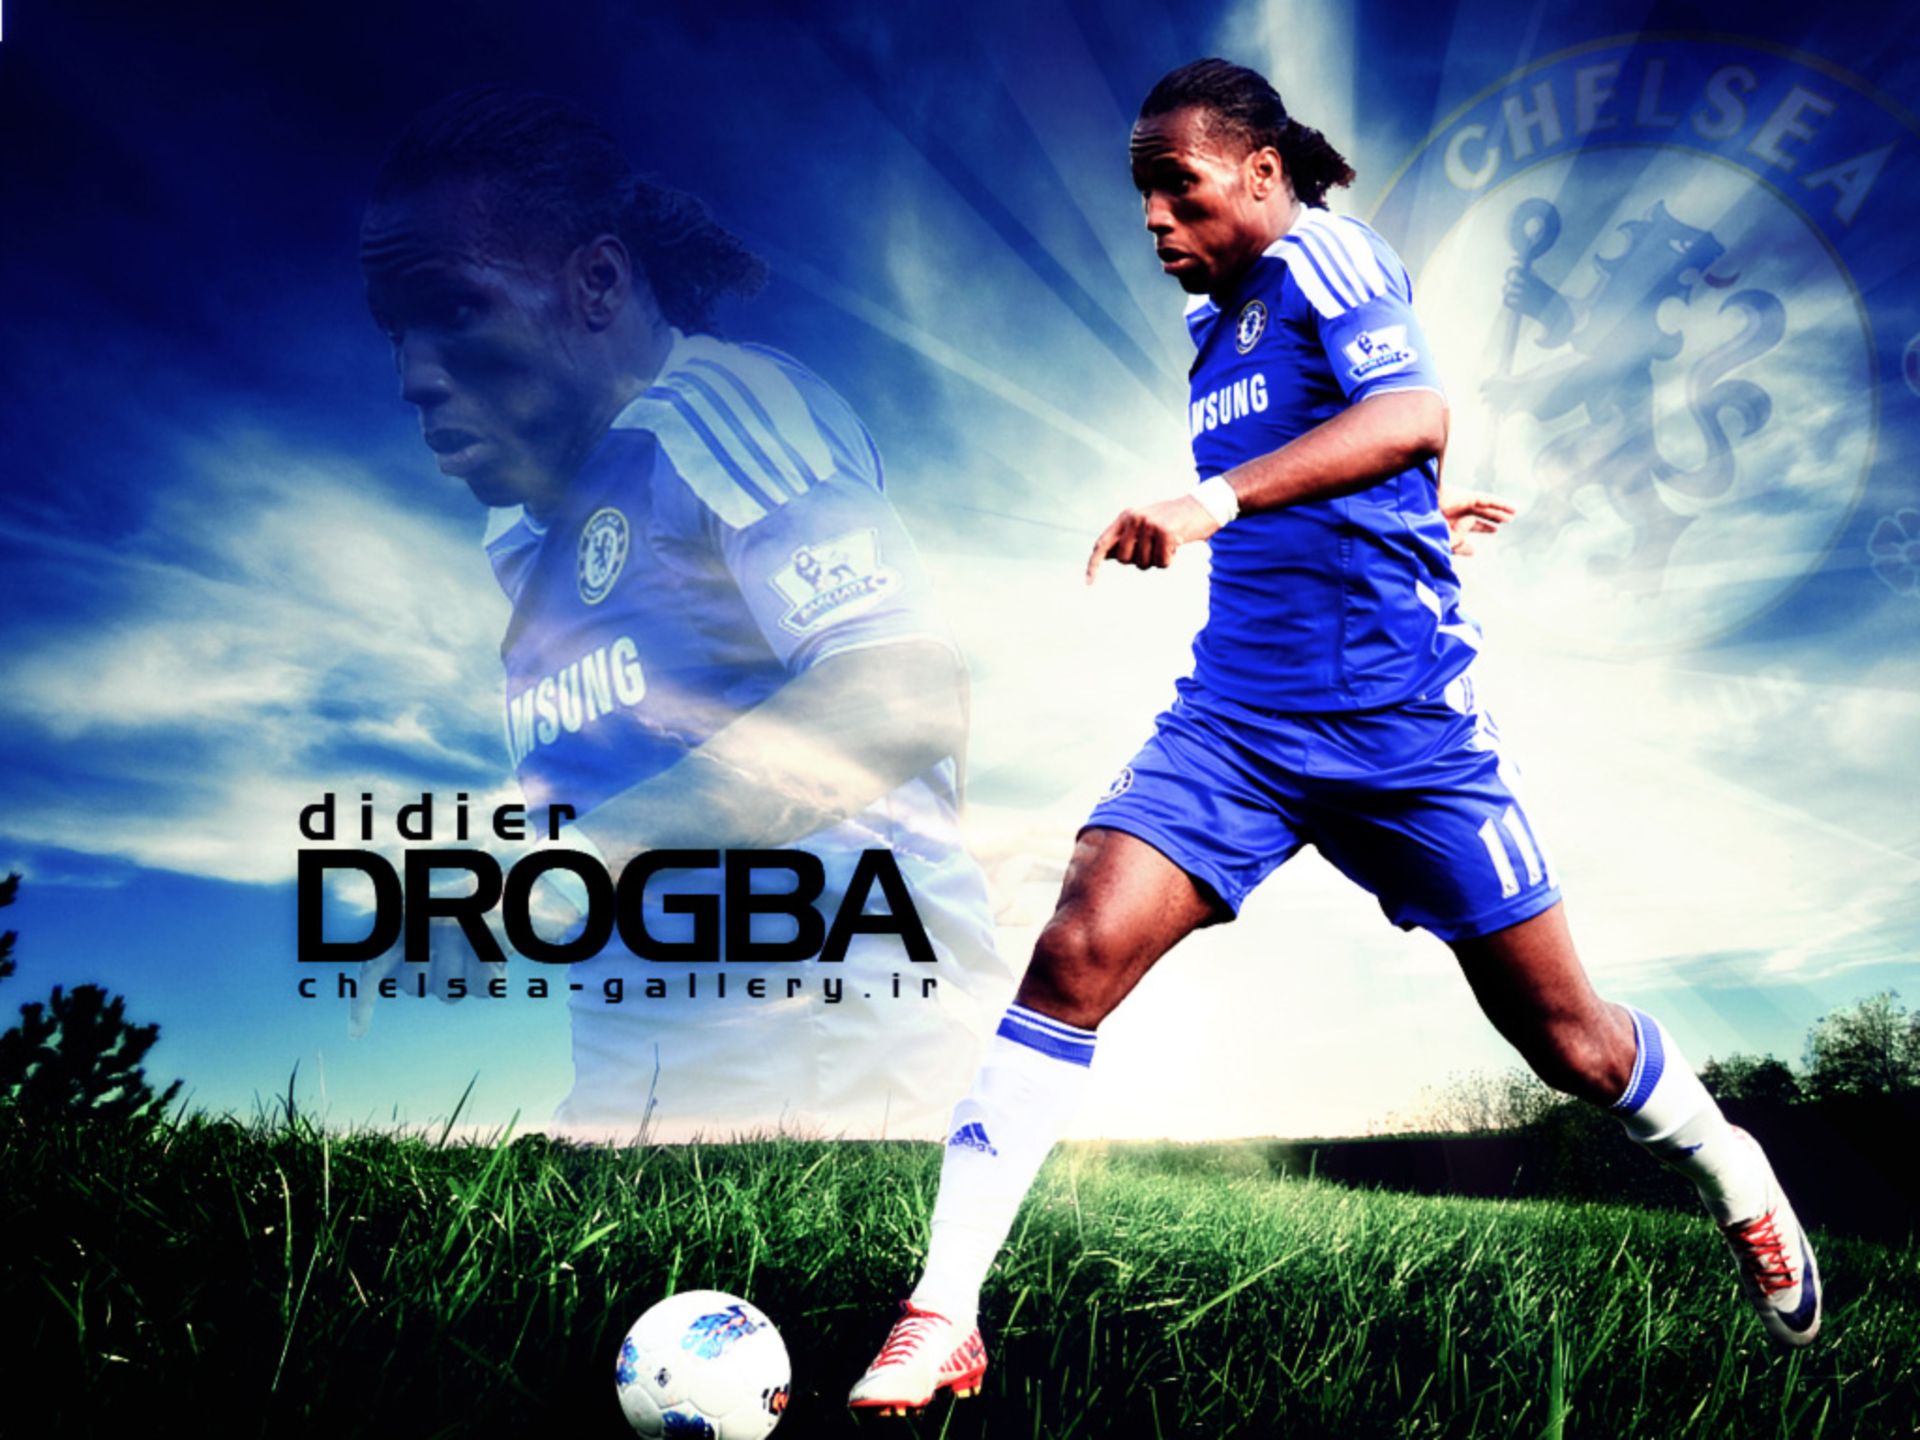 File:Didier Drogba Champions League Winner.jpg - Wikipedia